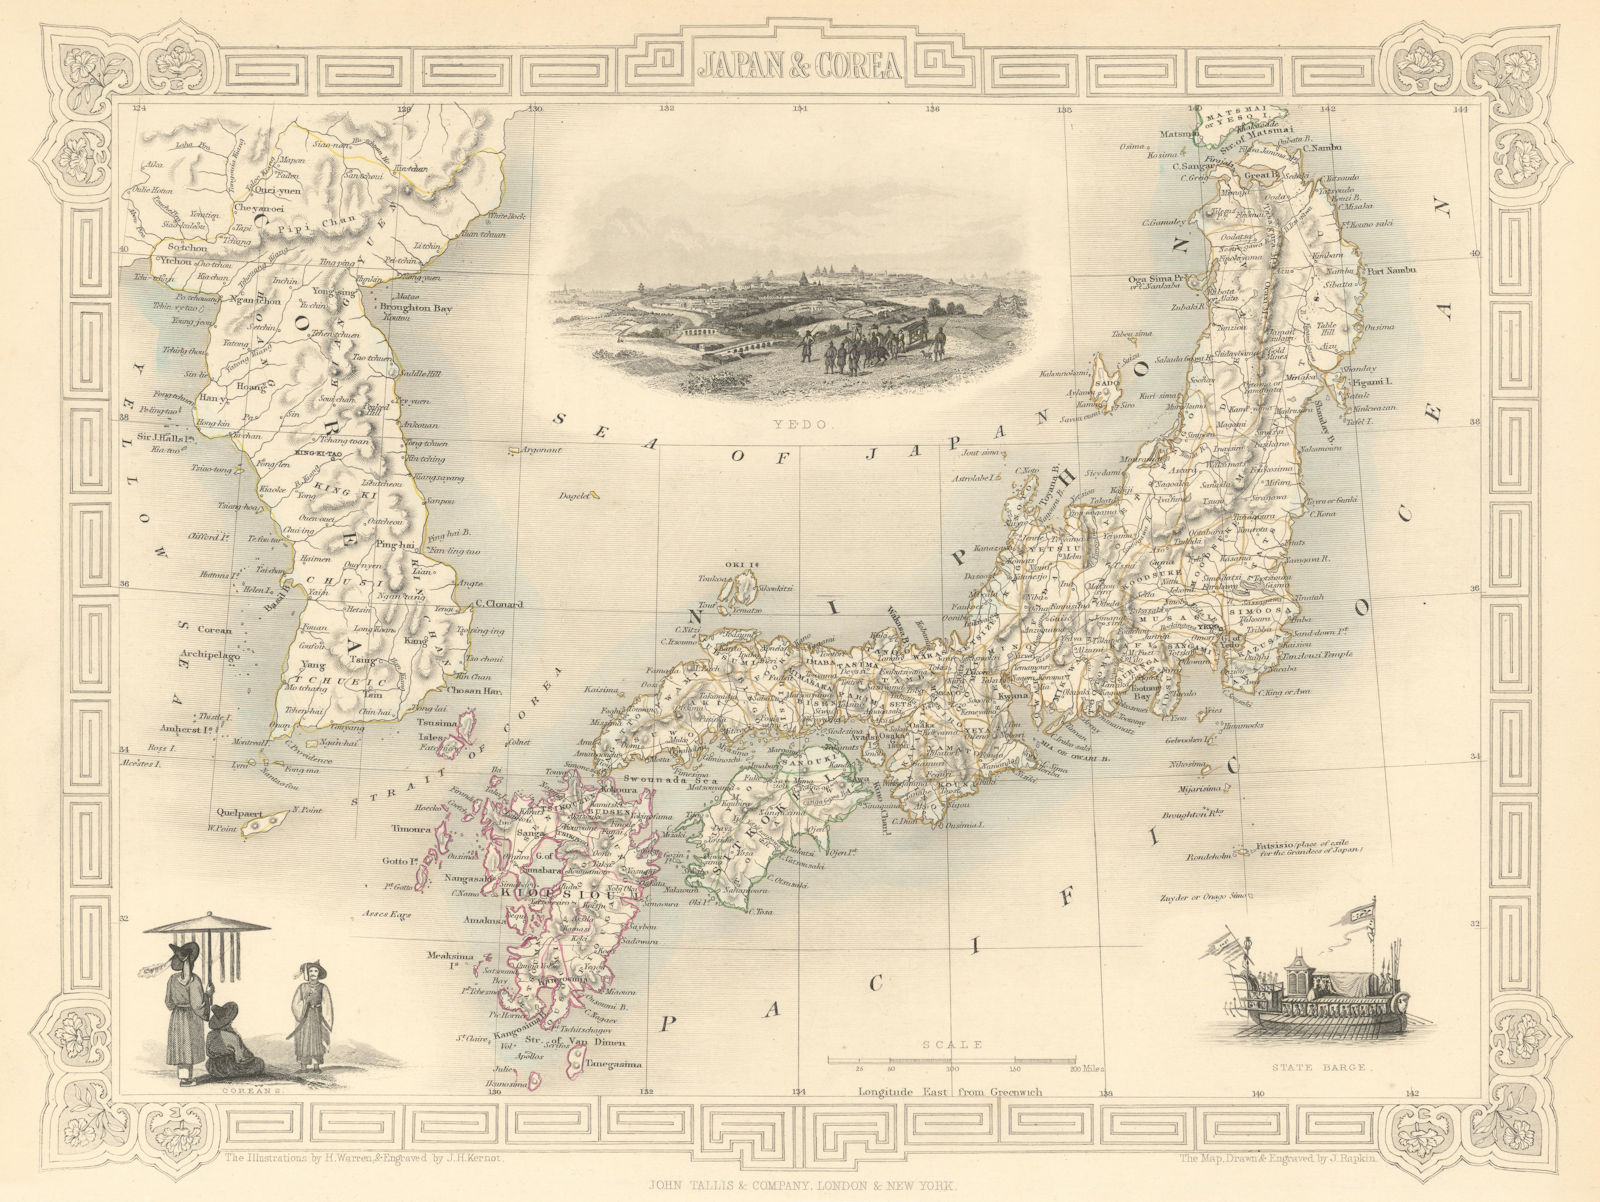 JAPAN & COREA. Yedo (Tokyo) King-ki-Tao (Seoul). Korea. TALLIS & RAPKIN 1851 map